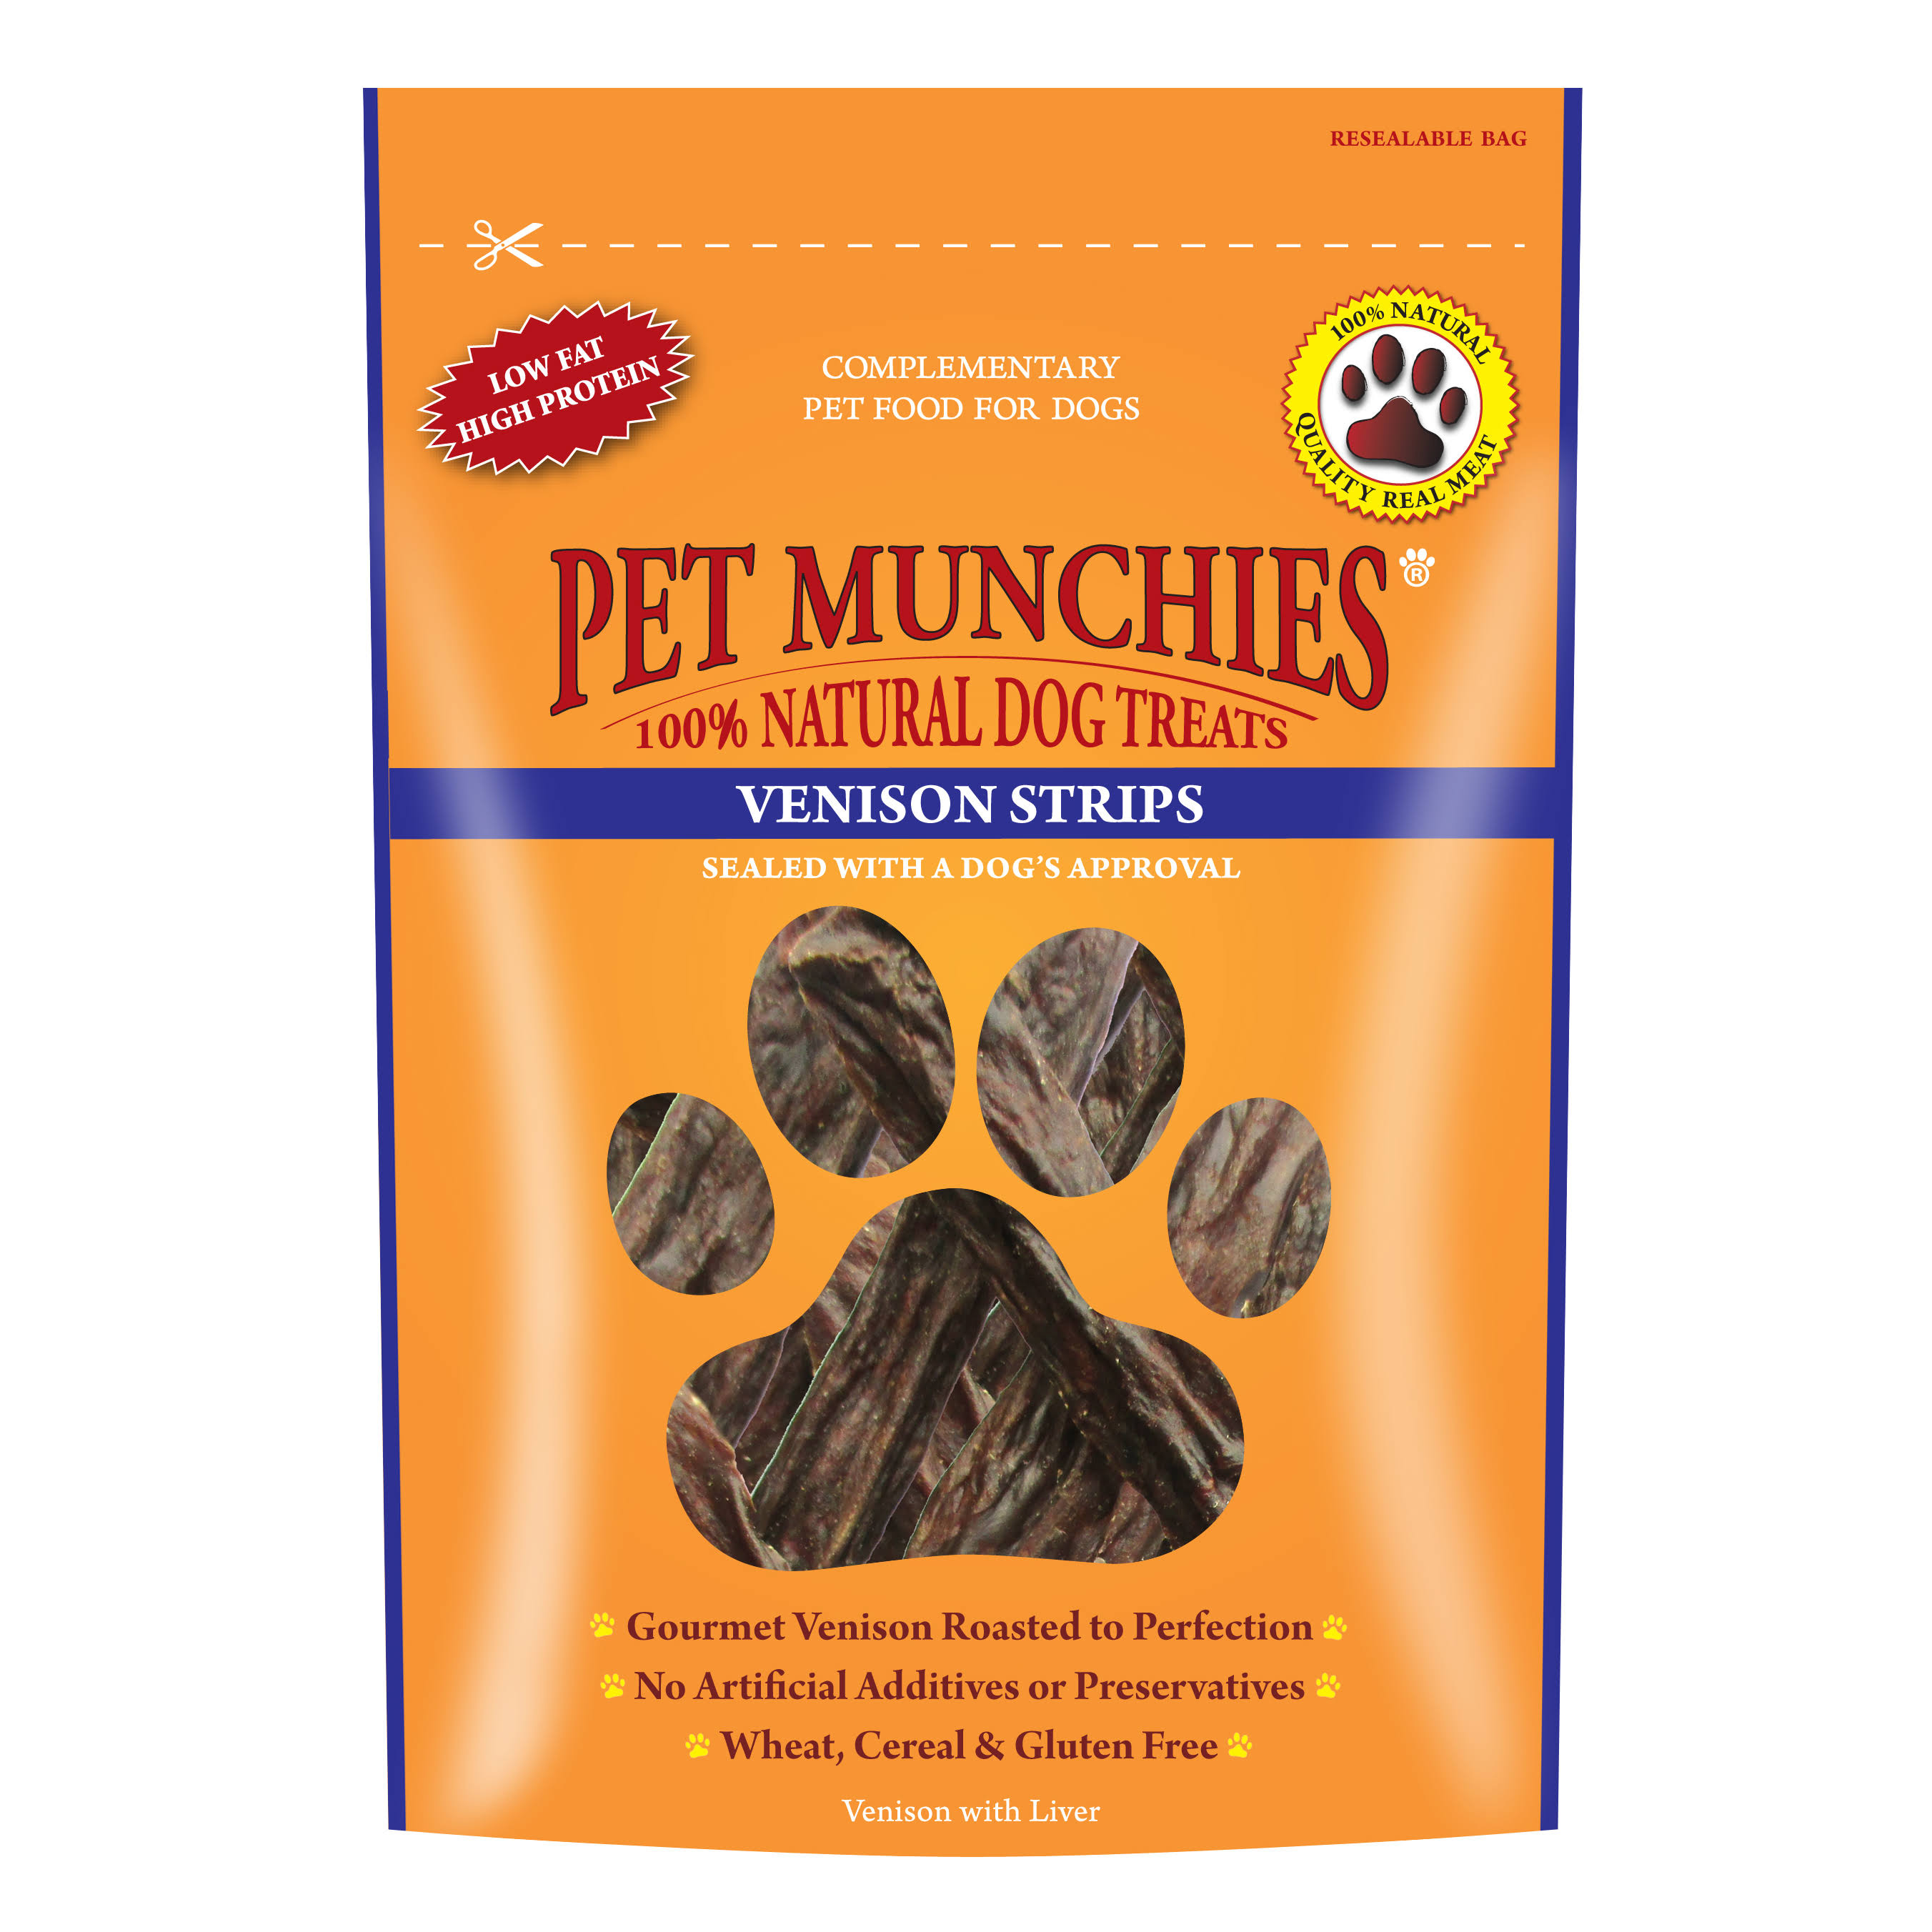 Pet Munchies Natural Dog Treats - Venison Strips, 75g